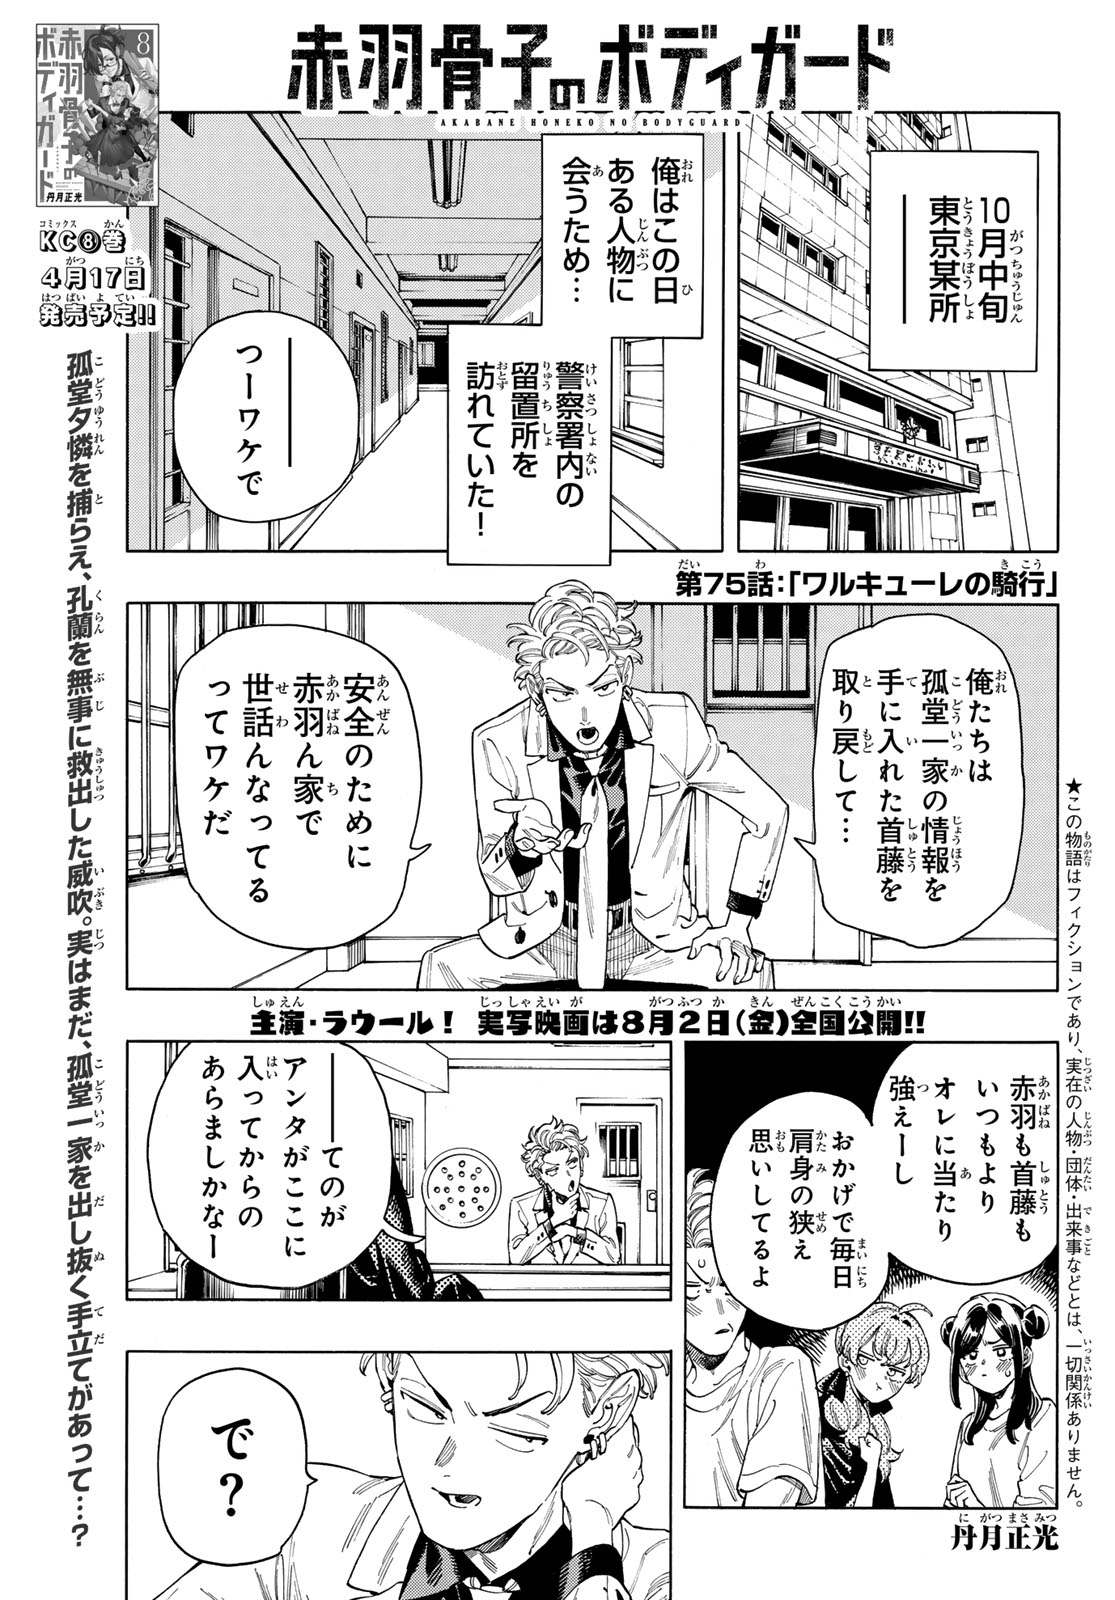 Akabane Honeko no Bodyguard - Chapter 75 - Page 1